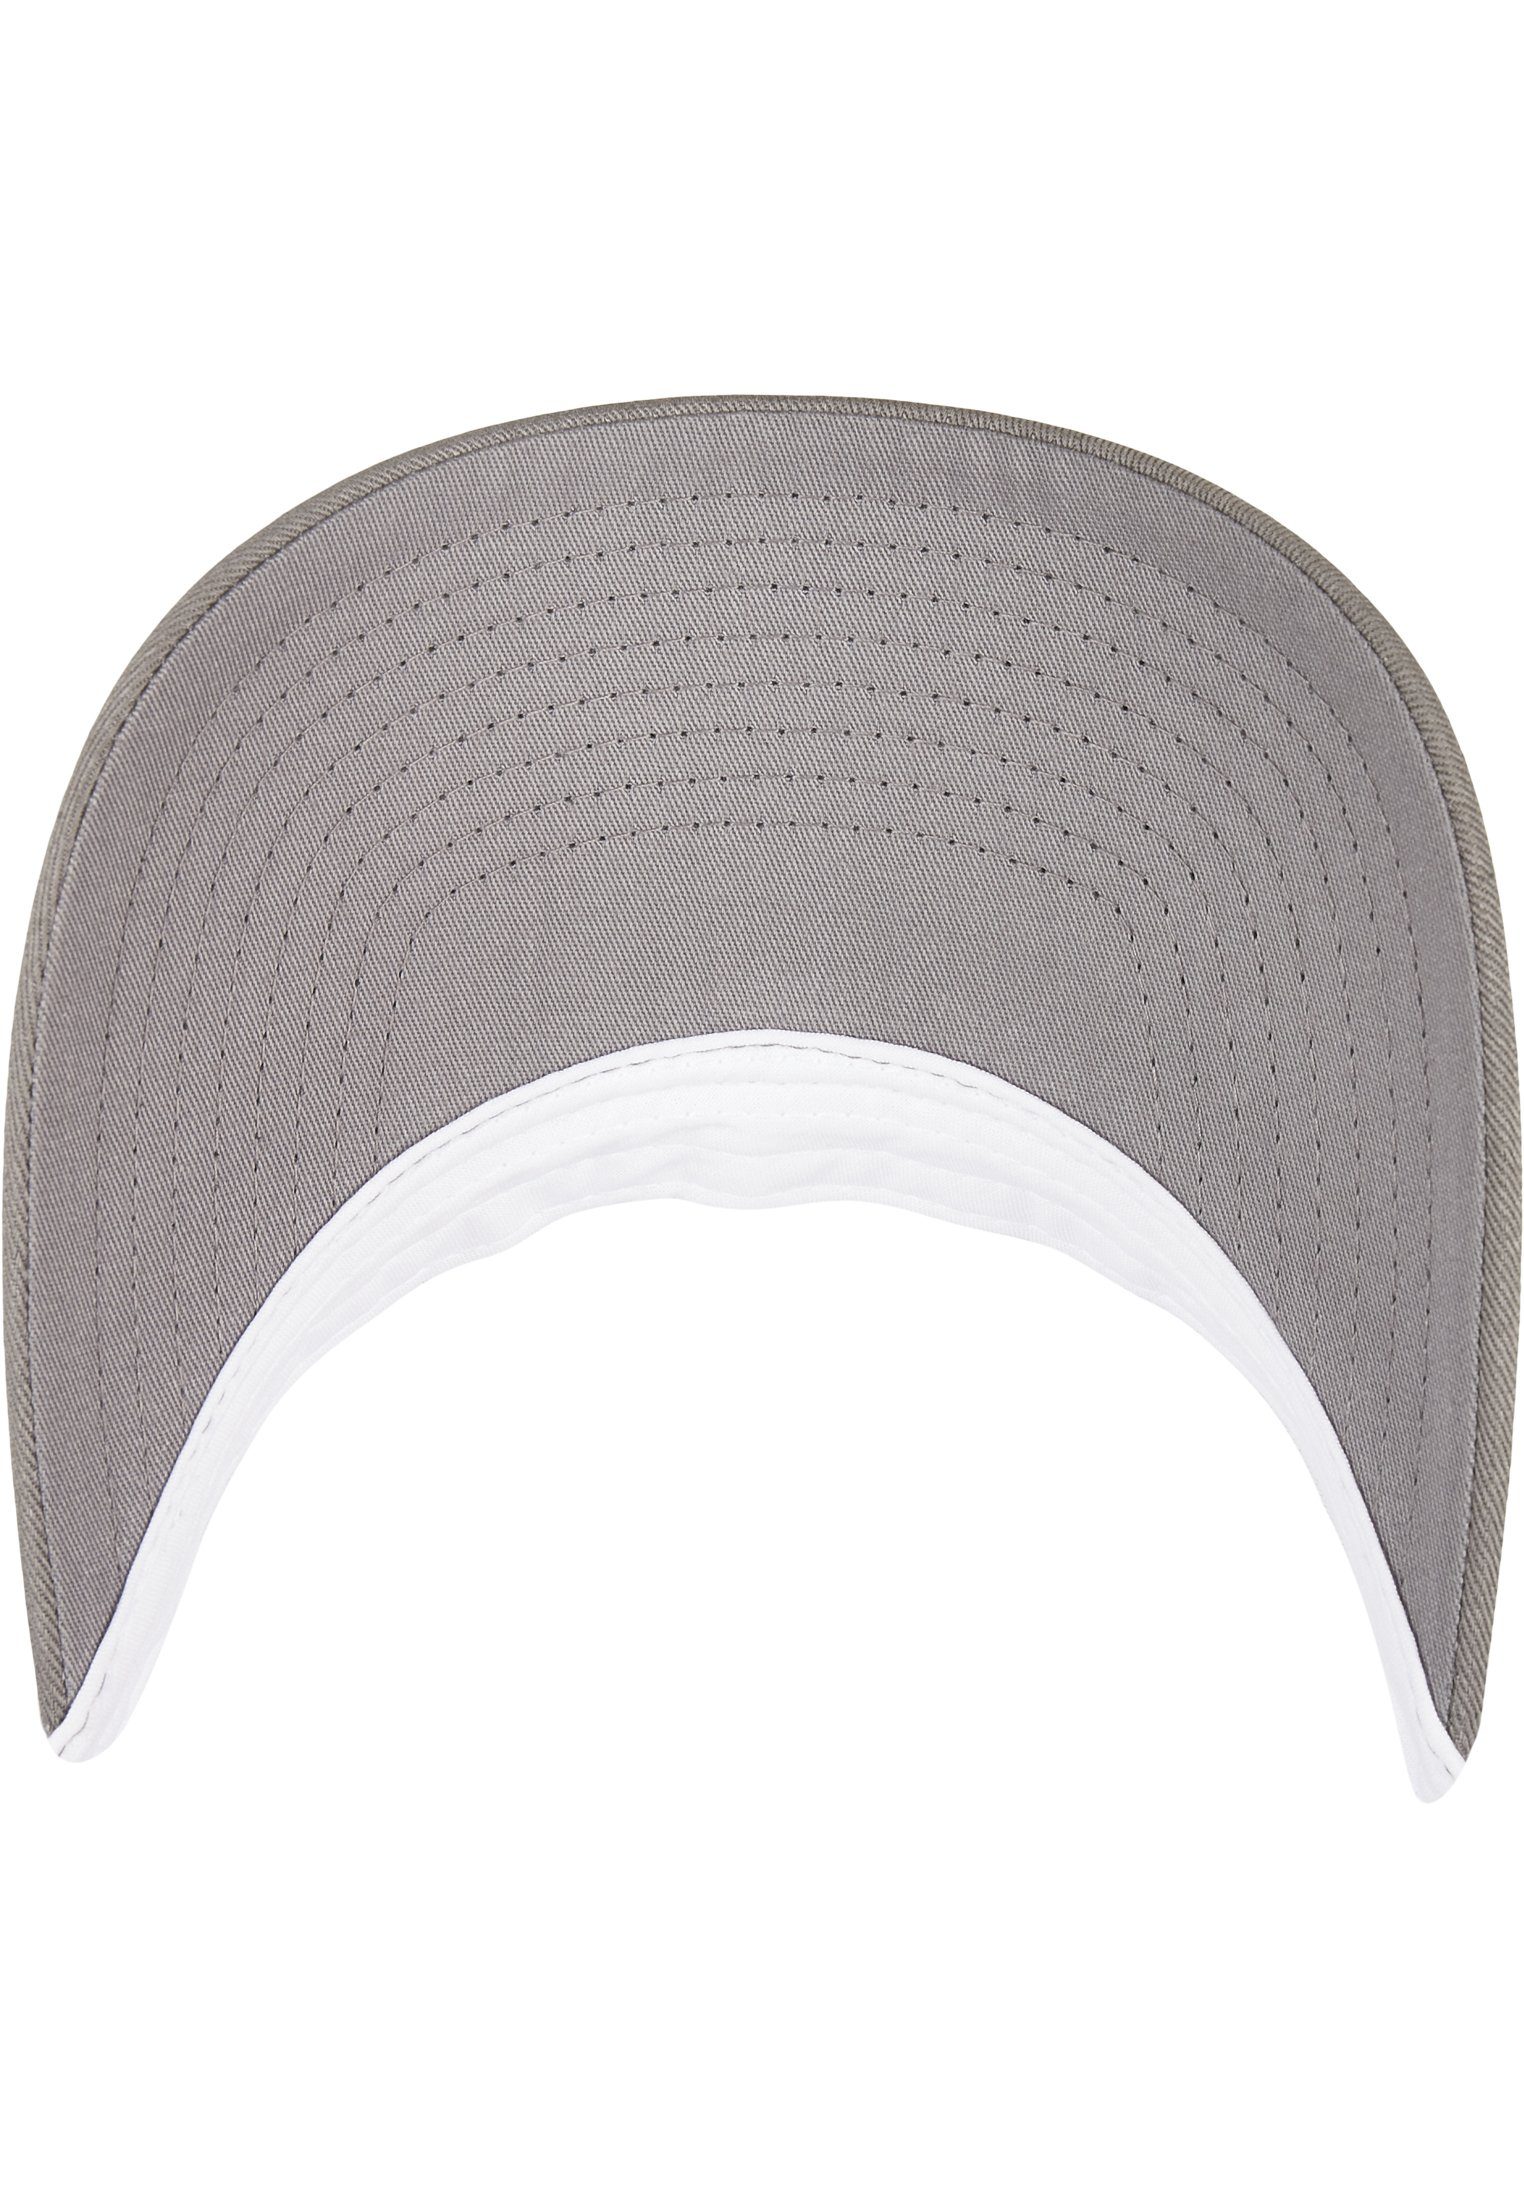 CAP Flex grey/white 2-TONE RECYCLED TRUCKER Flexfit Cap CLASSICS Caps RETRO YP